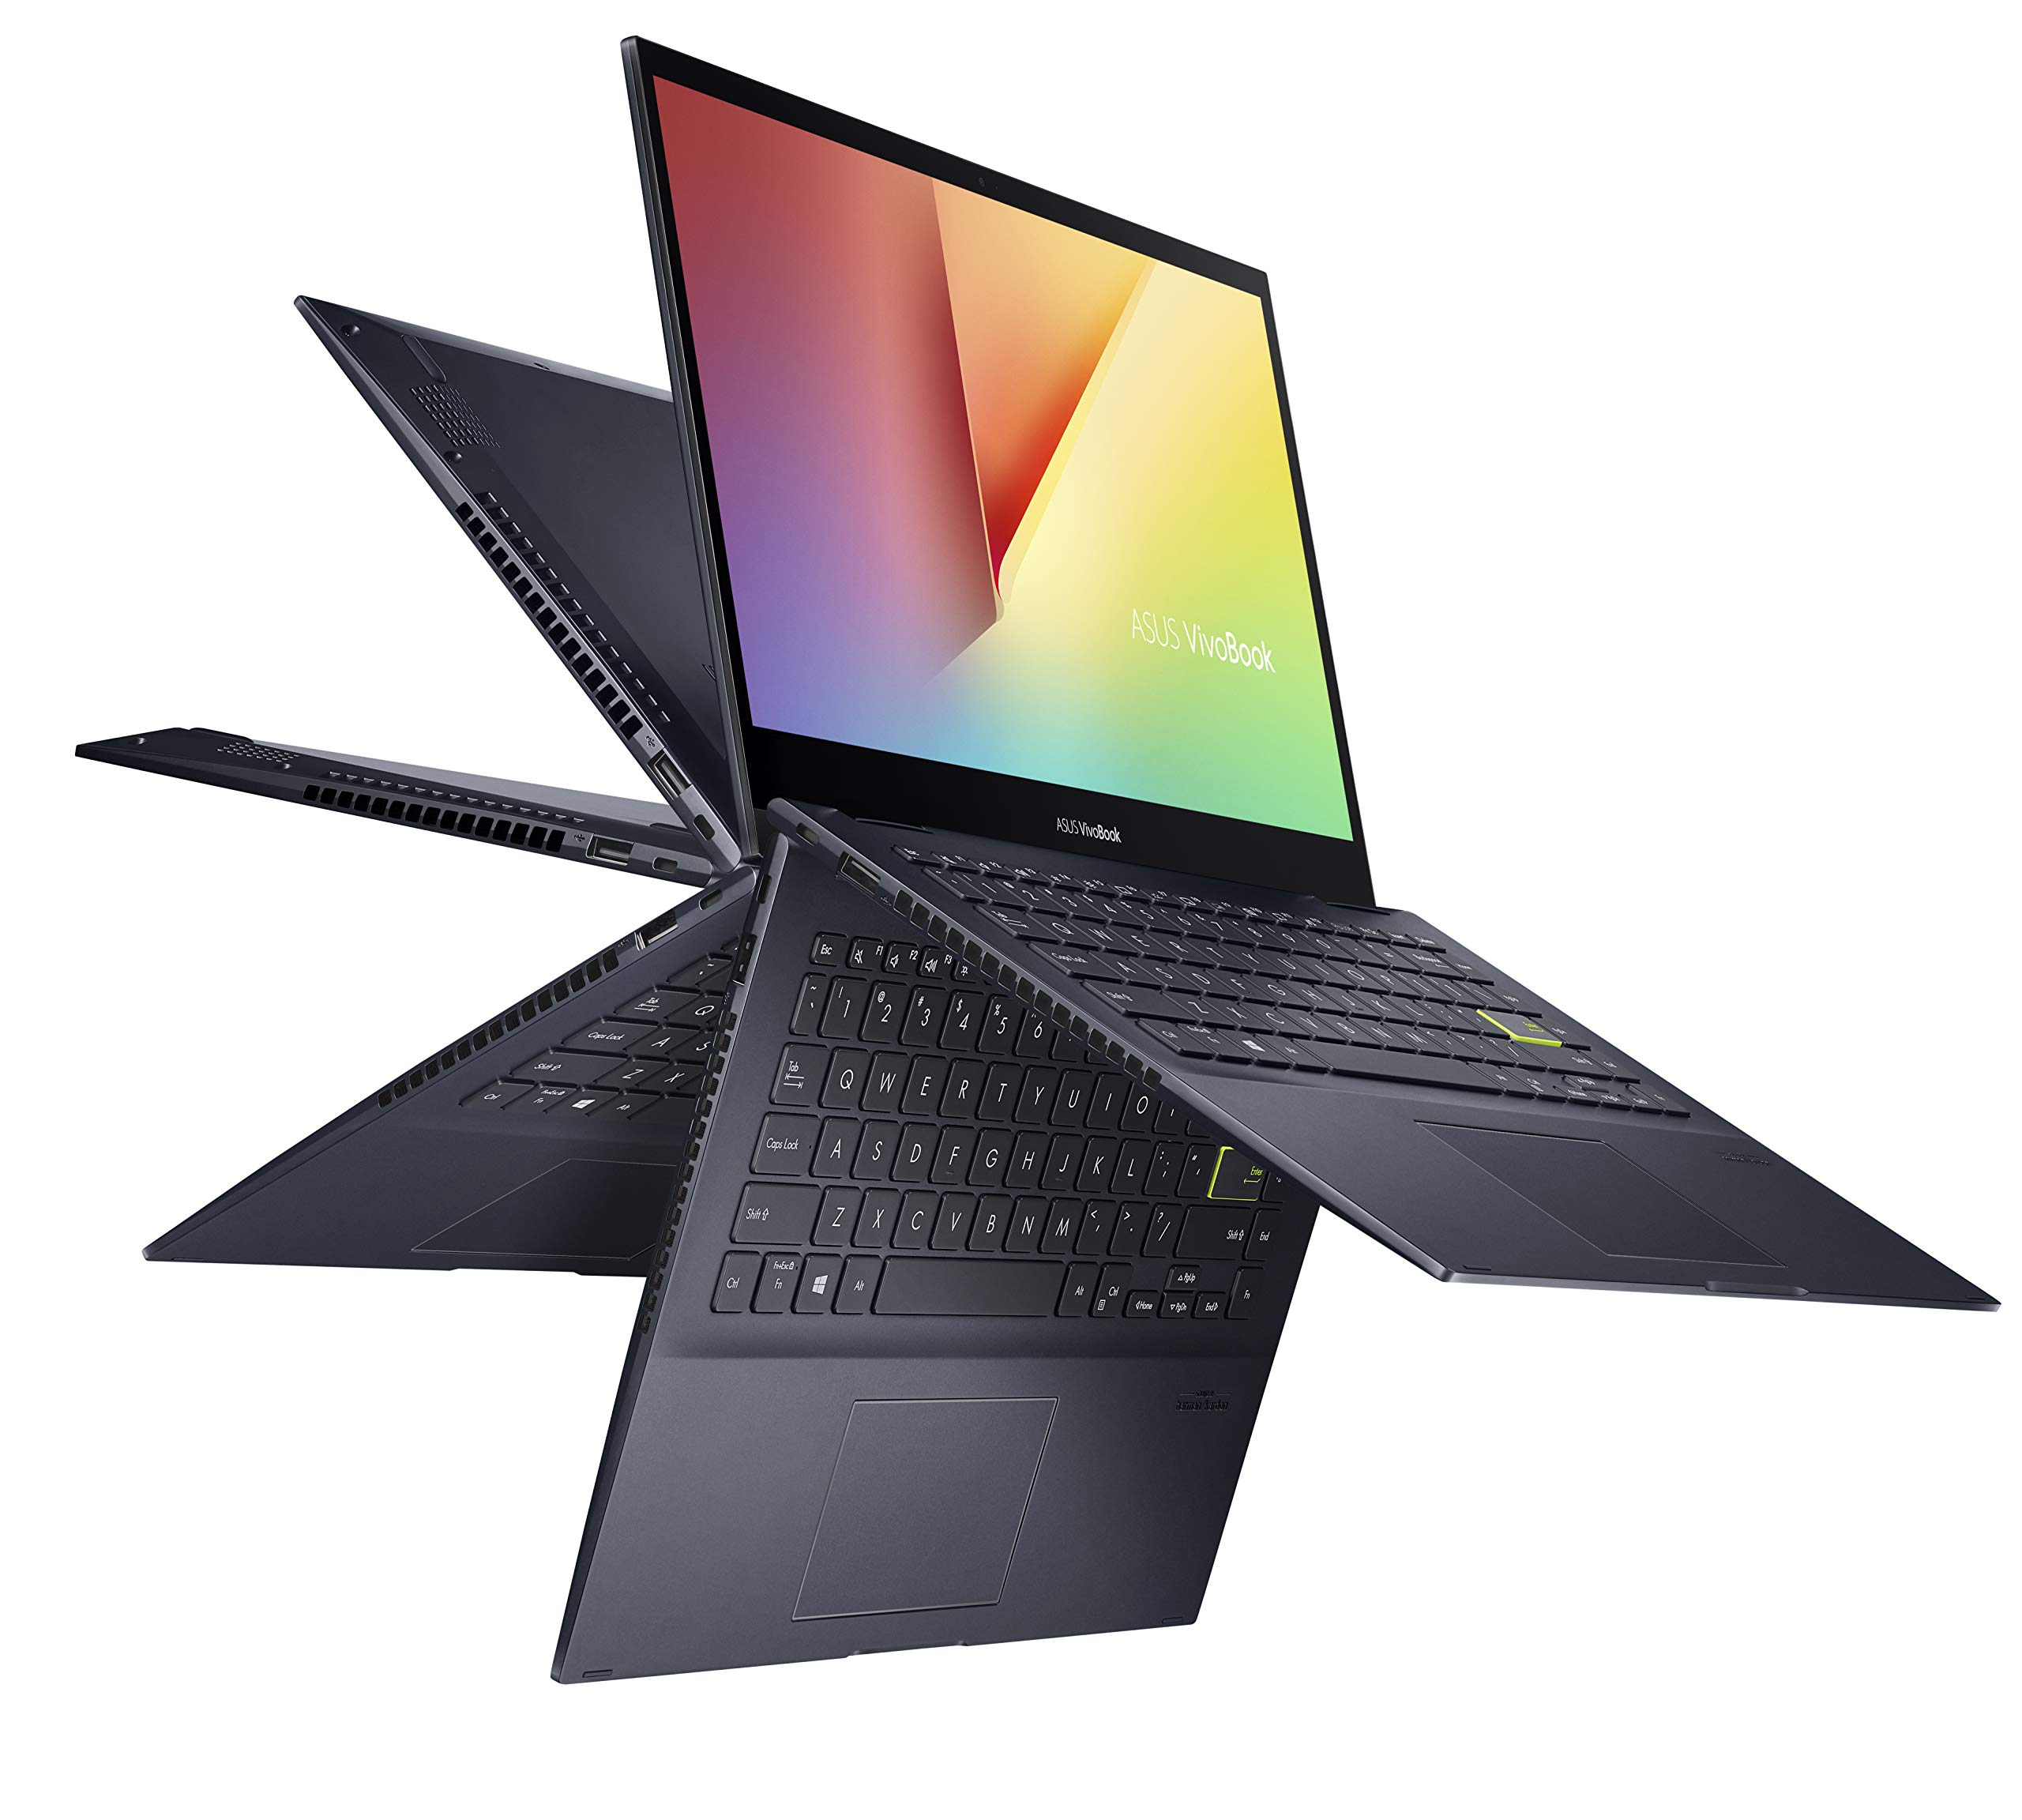 ASUS VivoBook Flip 14 Thin and Light 2-in-1 Laptop, 14” FHD Touch Display, AMD Ryzen 5 4500U, 8GB DDR4 RAM, 256GB SSD, Glossy, Stylus, Fingerprint Reader, Windows 10 Home, Bespoke Black, TM420IA-DB51T